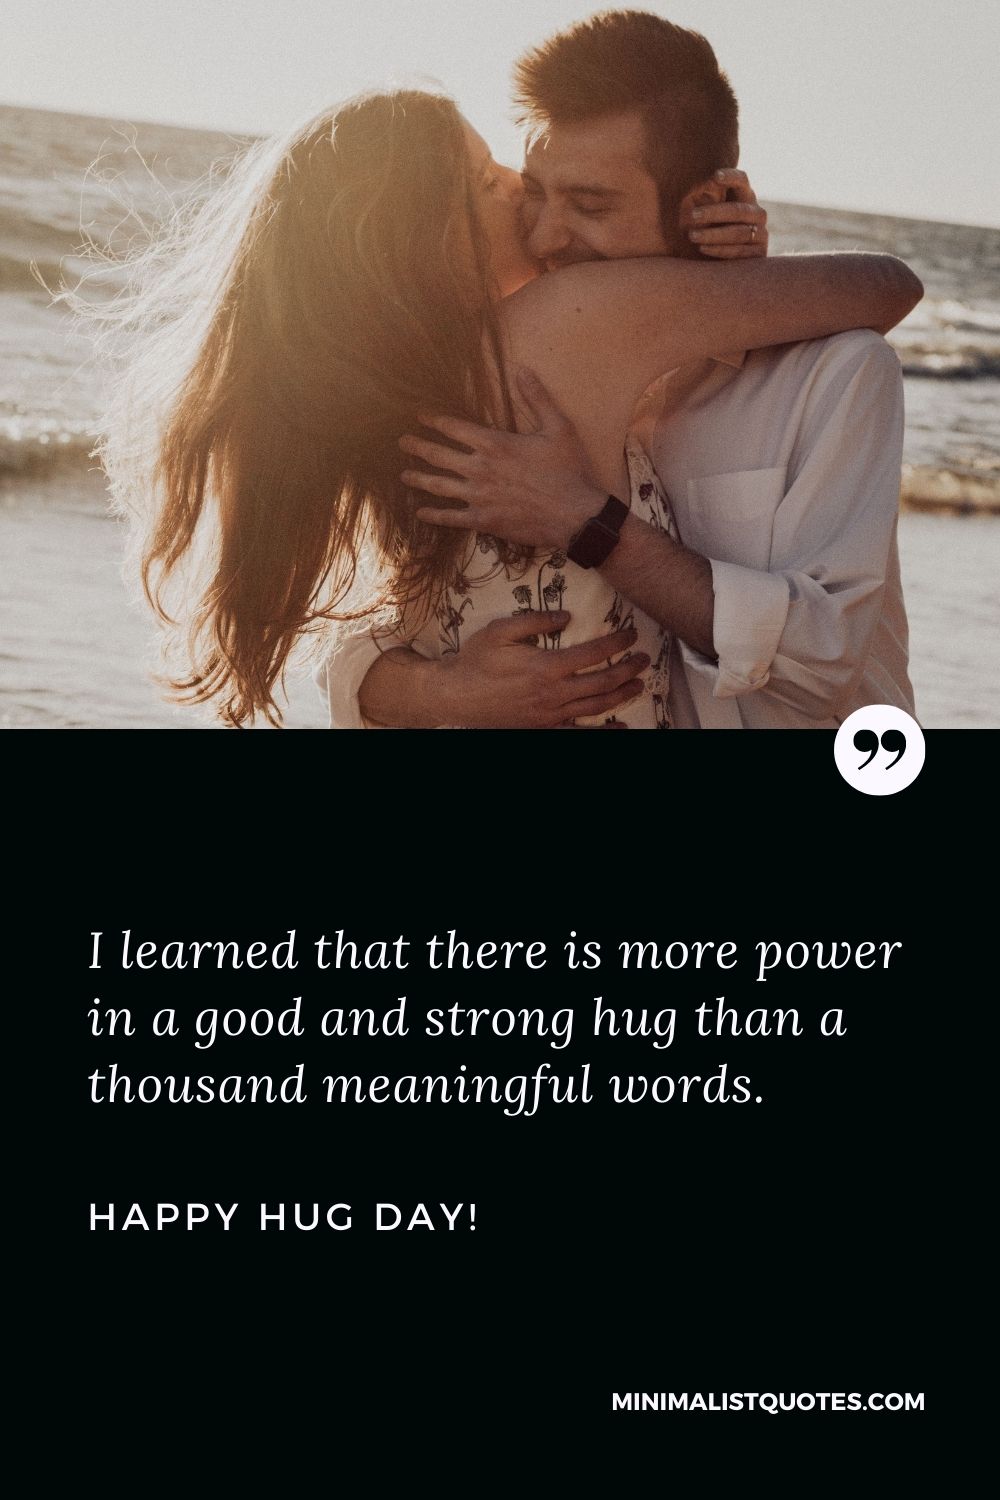 Hug Day Desktop Wallpaper 12643 - Baltana